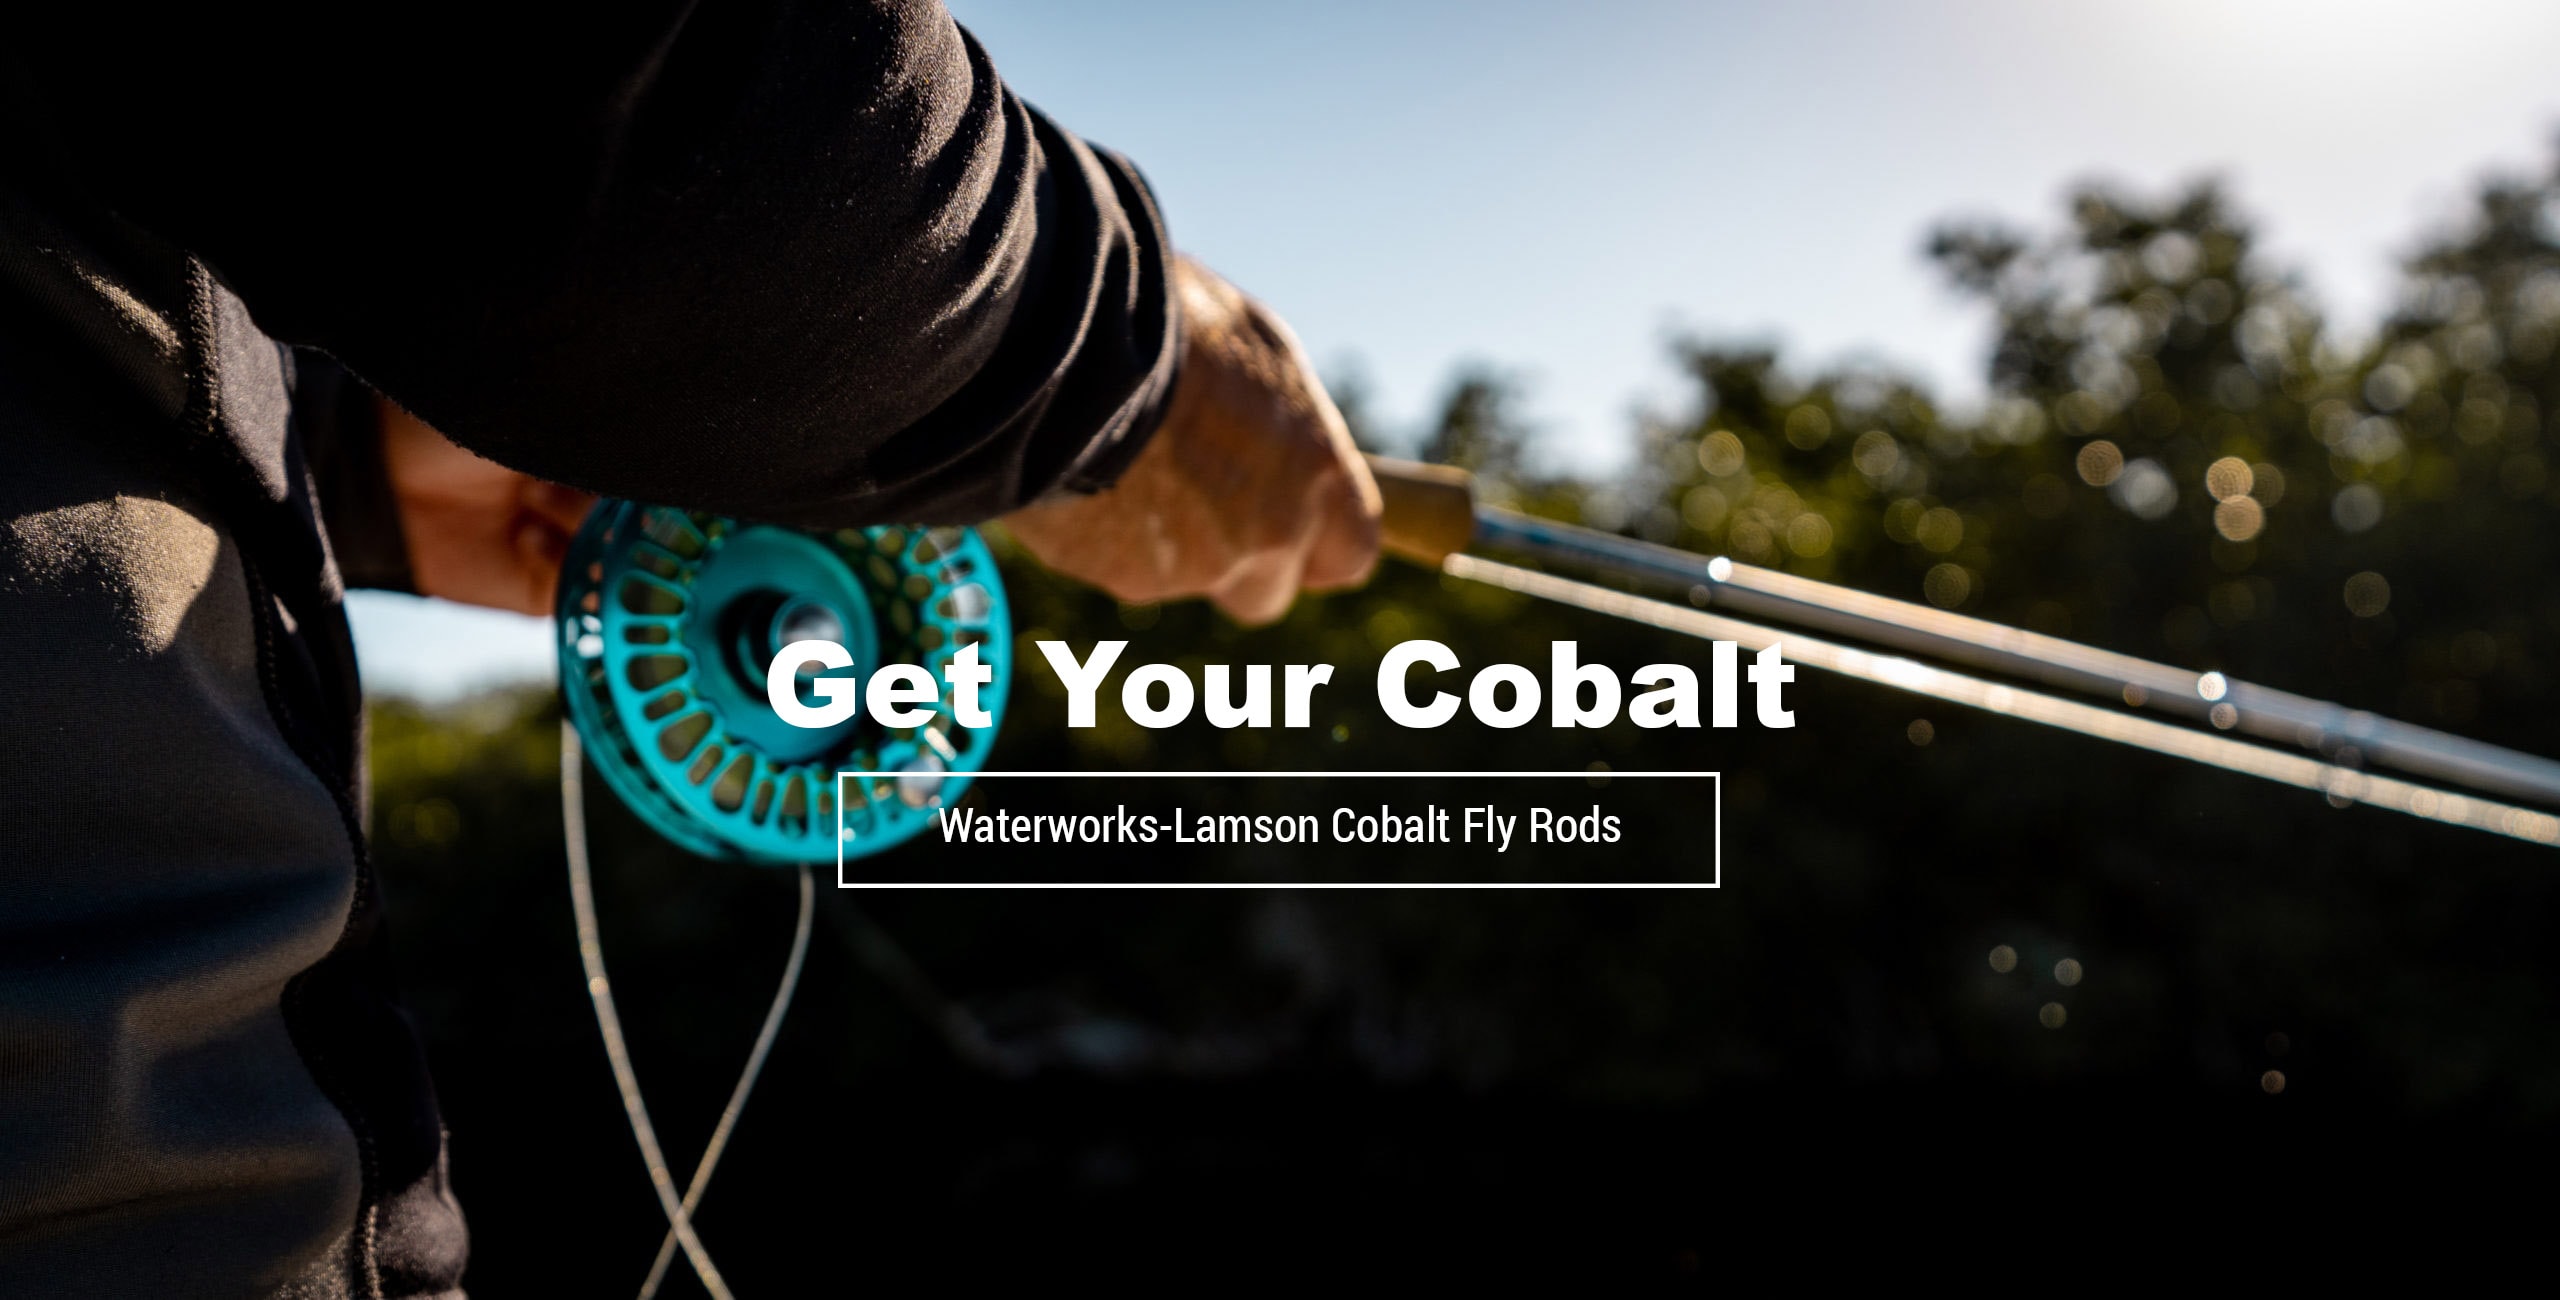 Waterworks-Lamson Cobalt Fly Rods